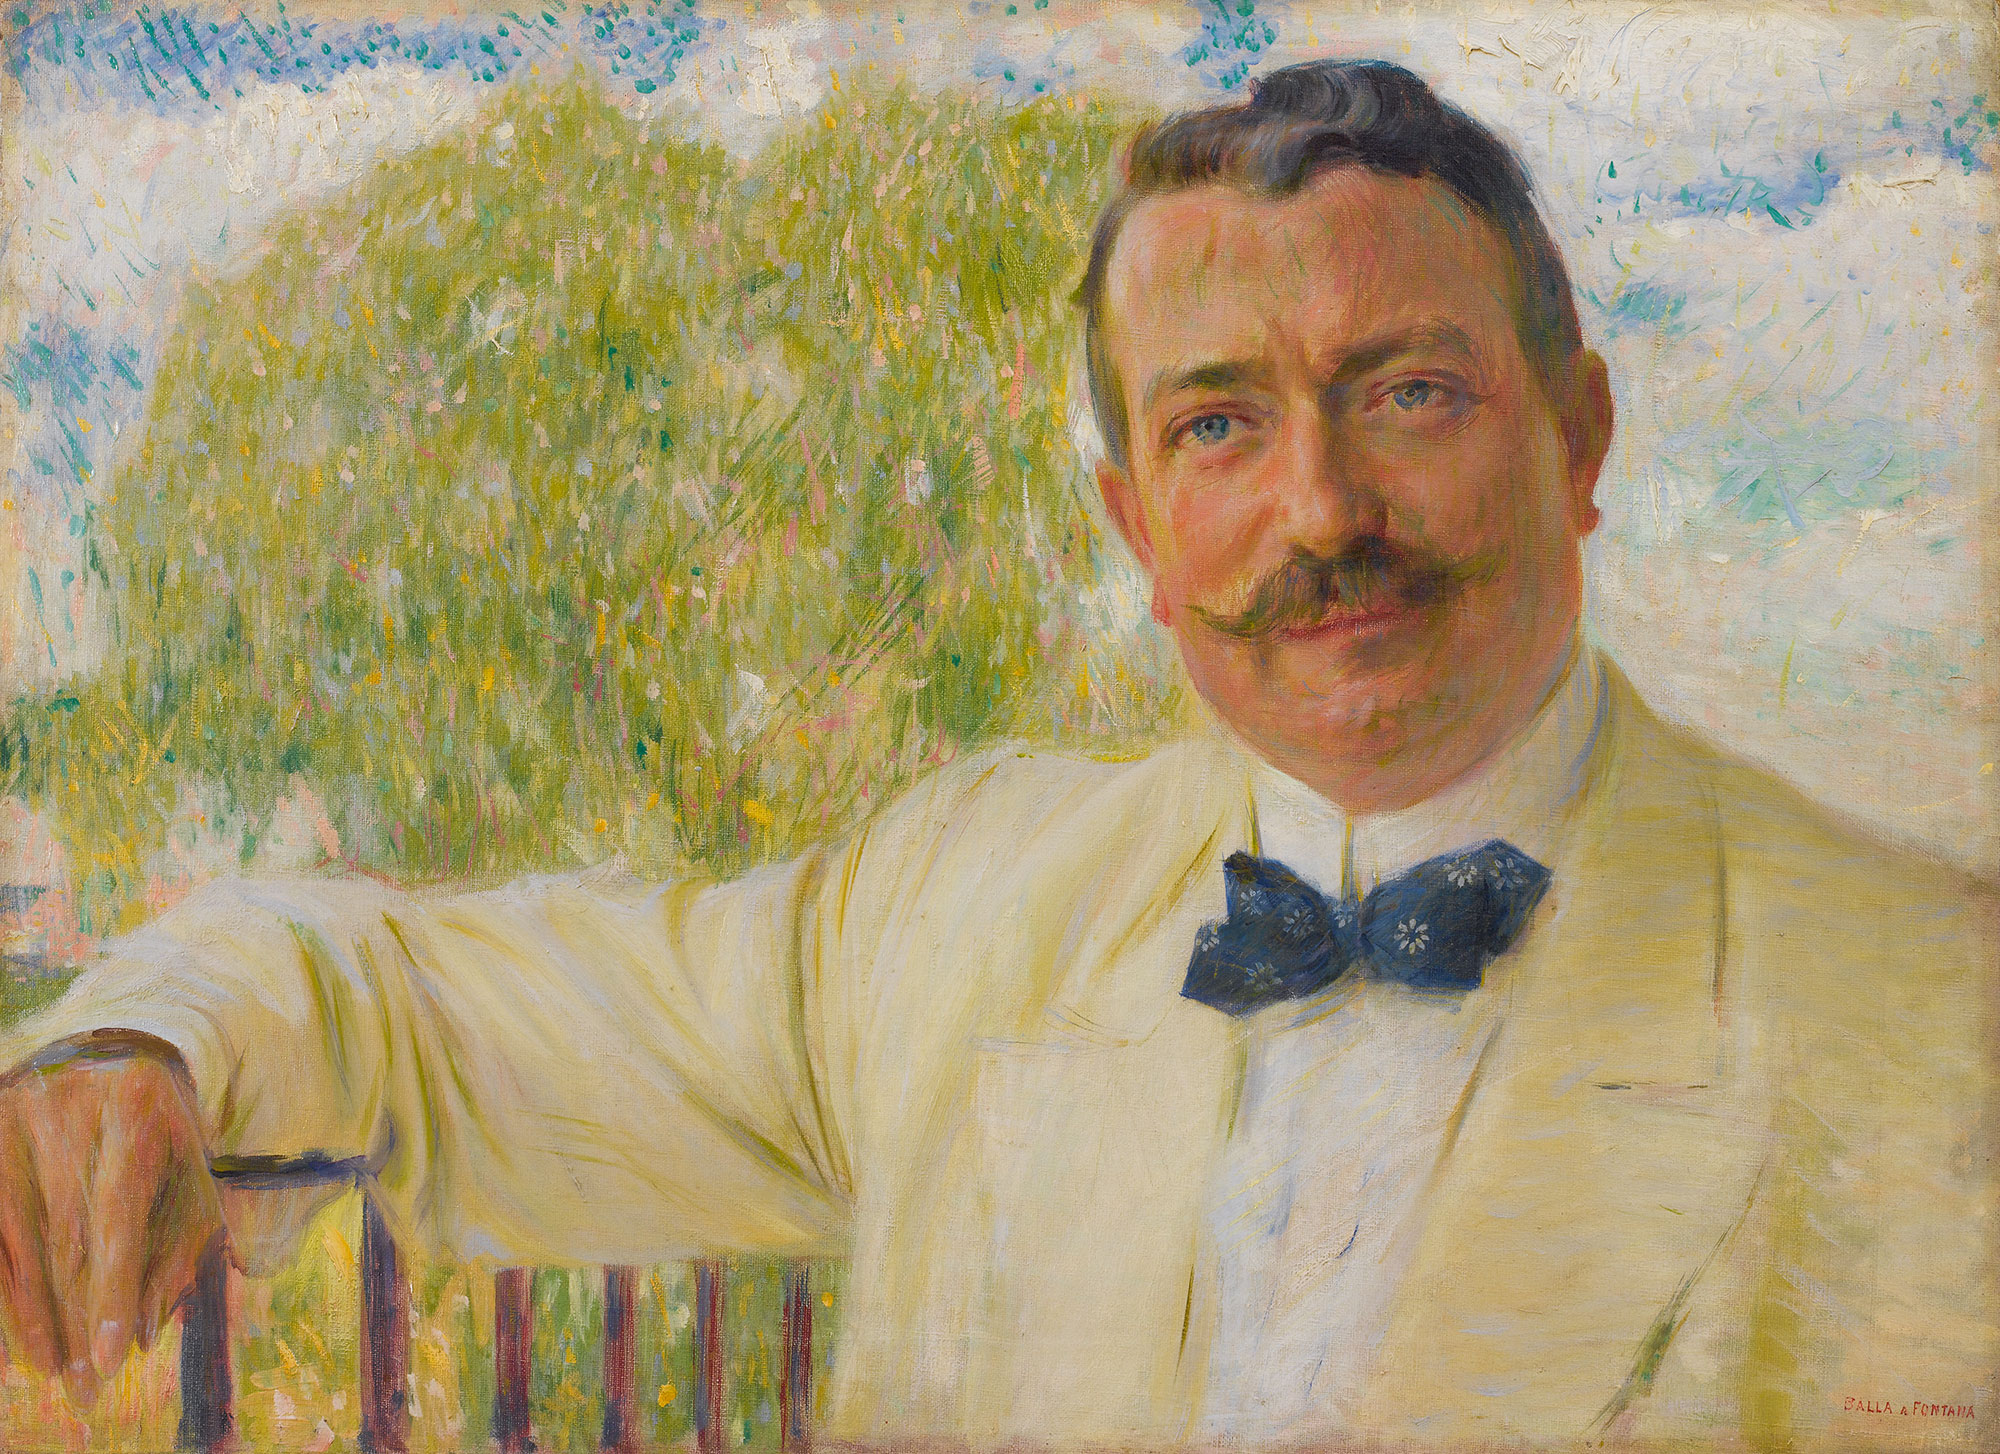 Giacomo Balla, Portrait of Fontana, 1907